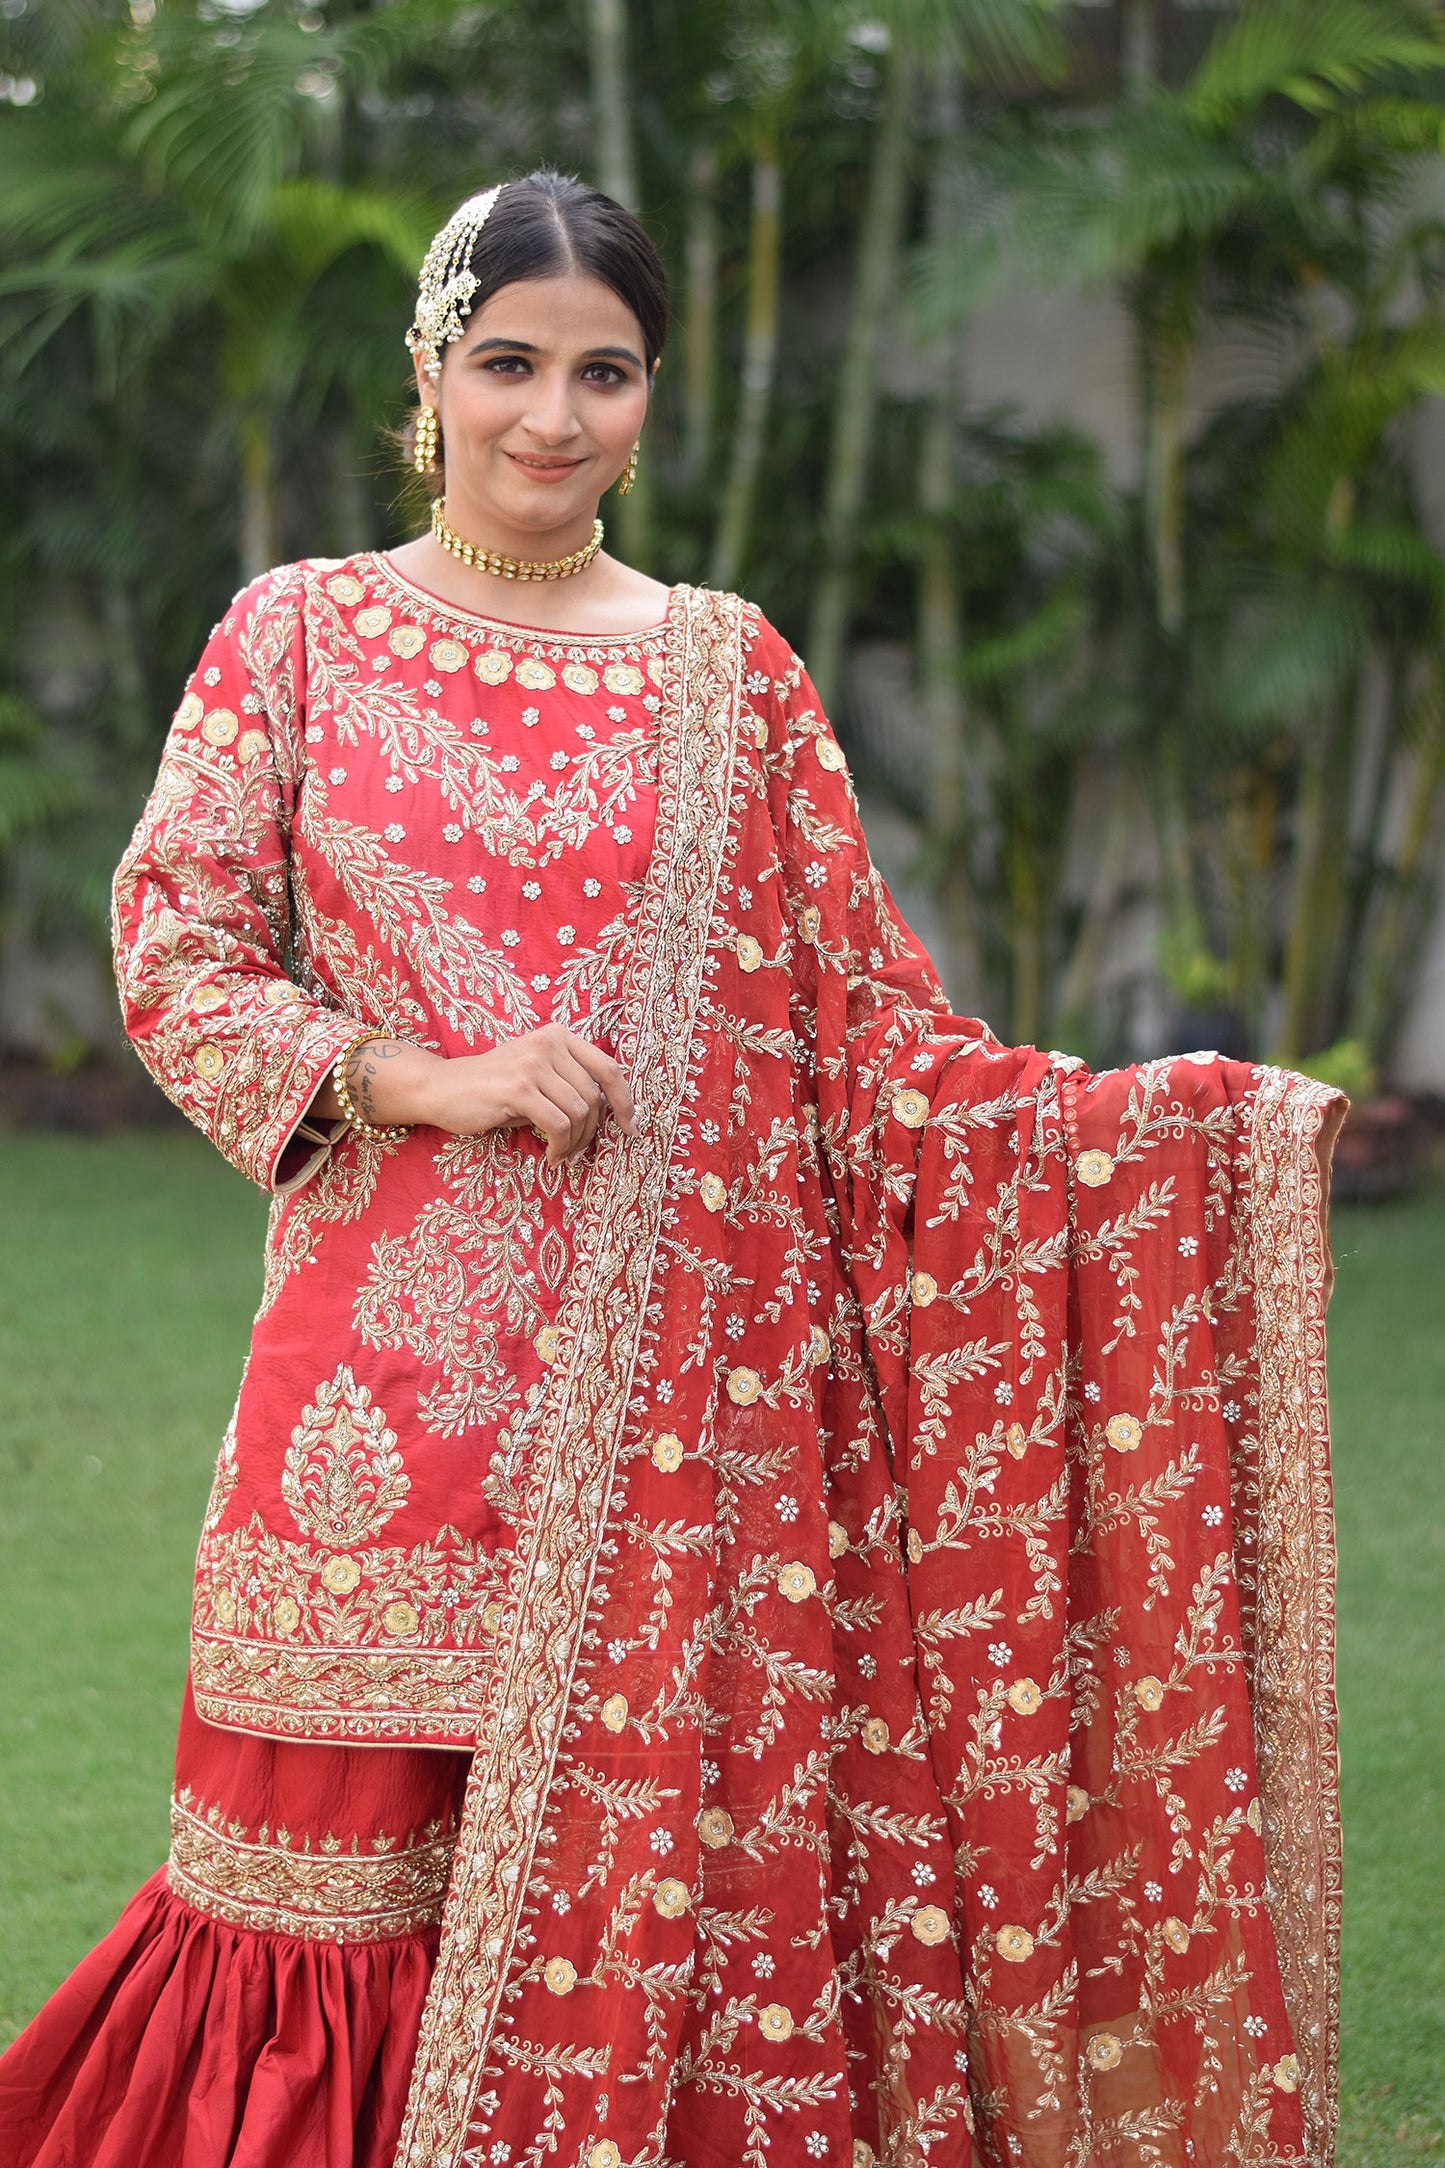 Indian Girl wearing Red Silk Gharara